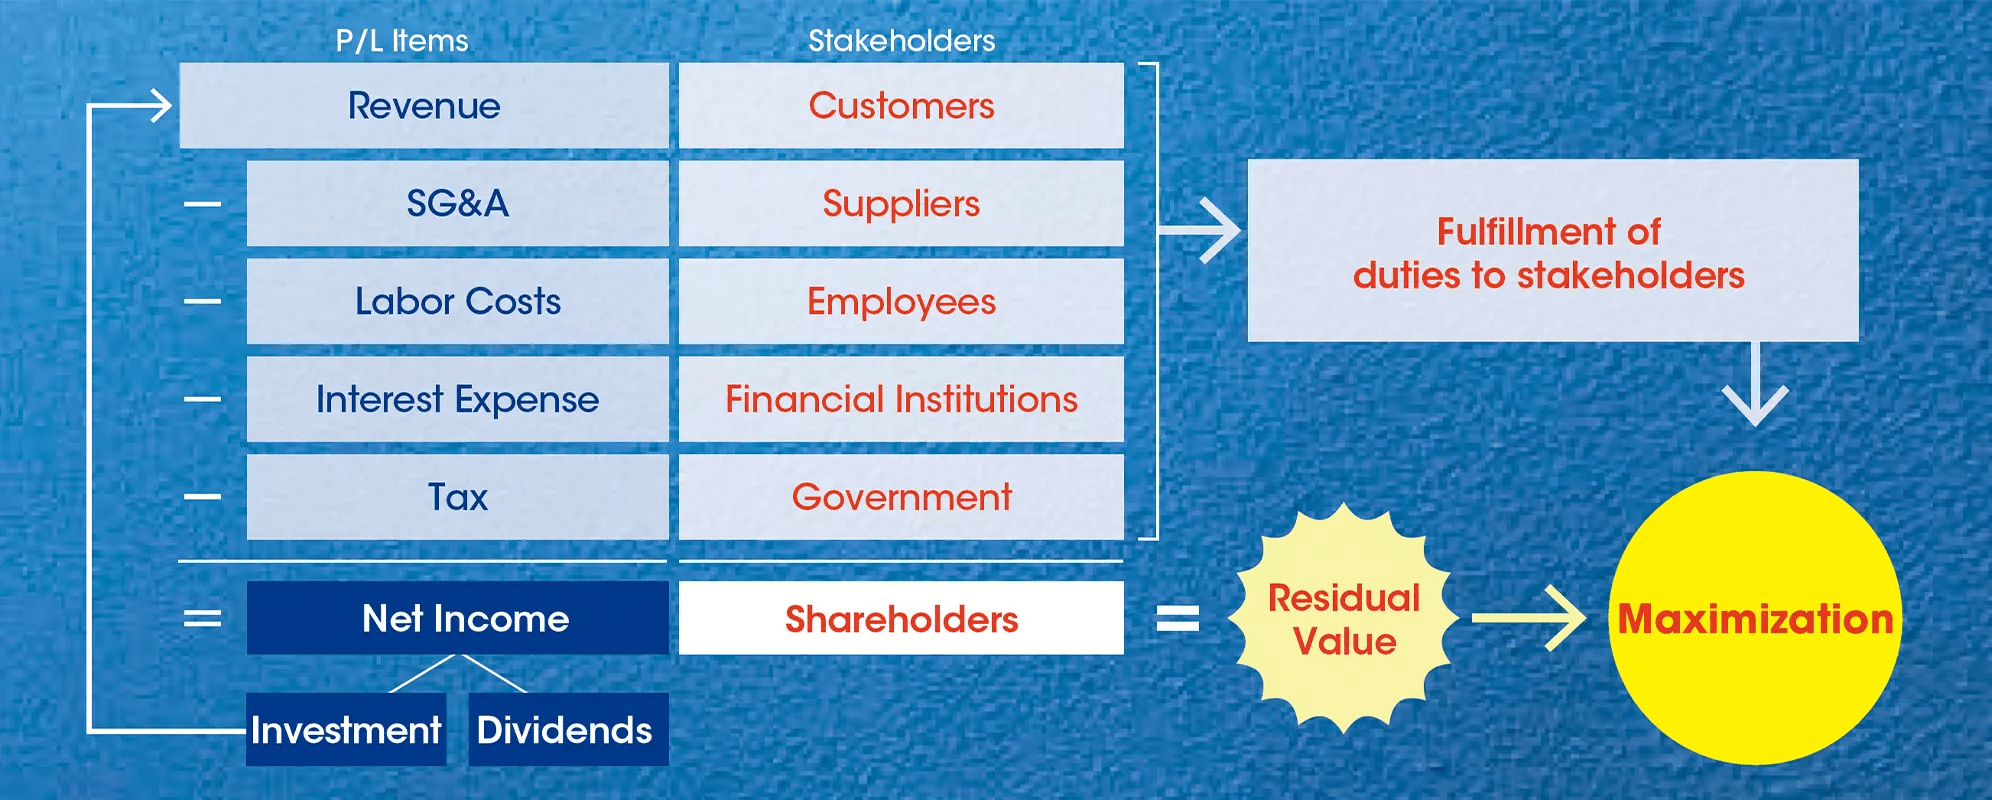 Maximization of Shareholder Value (MSV)